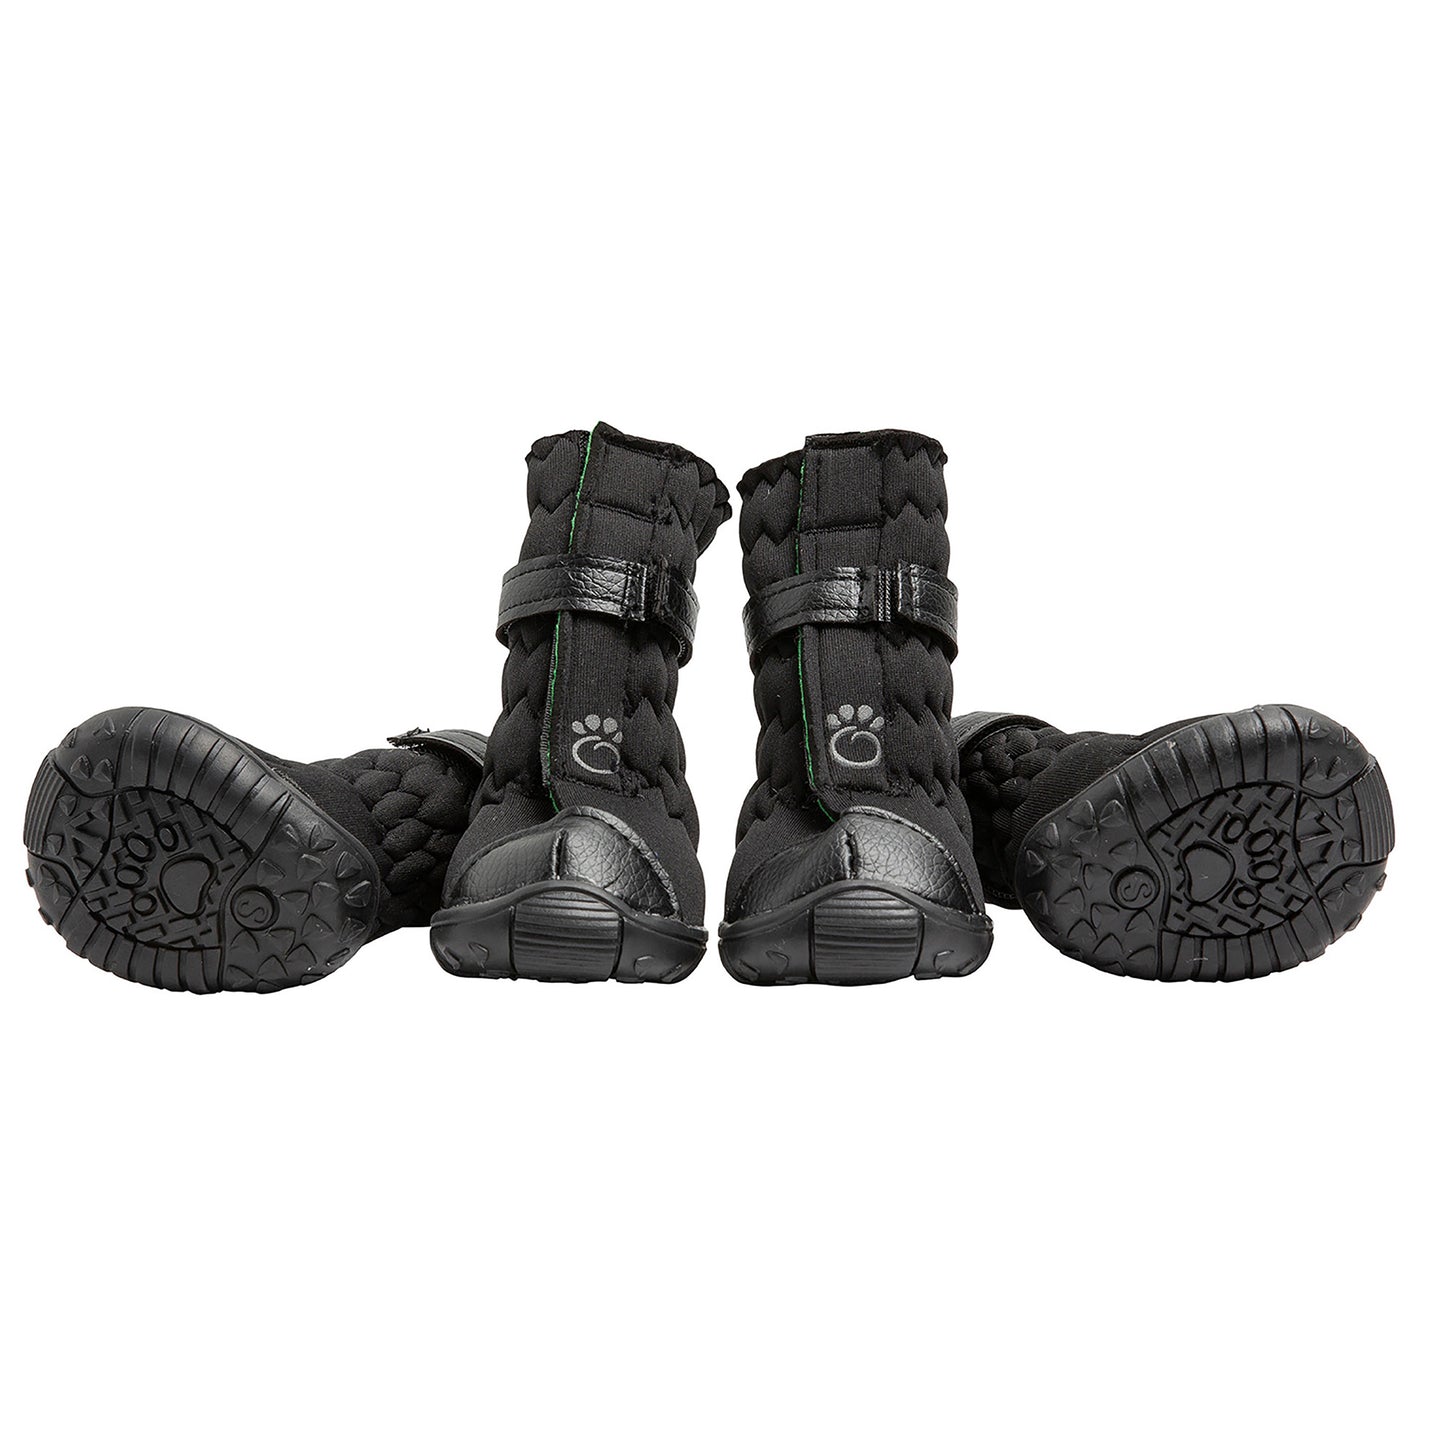 Elasto-fit Dog Boots - Black